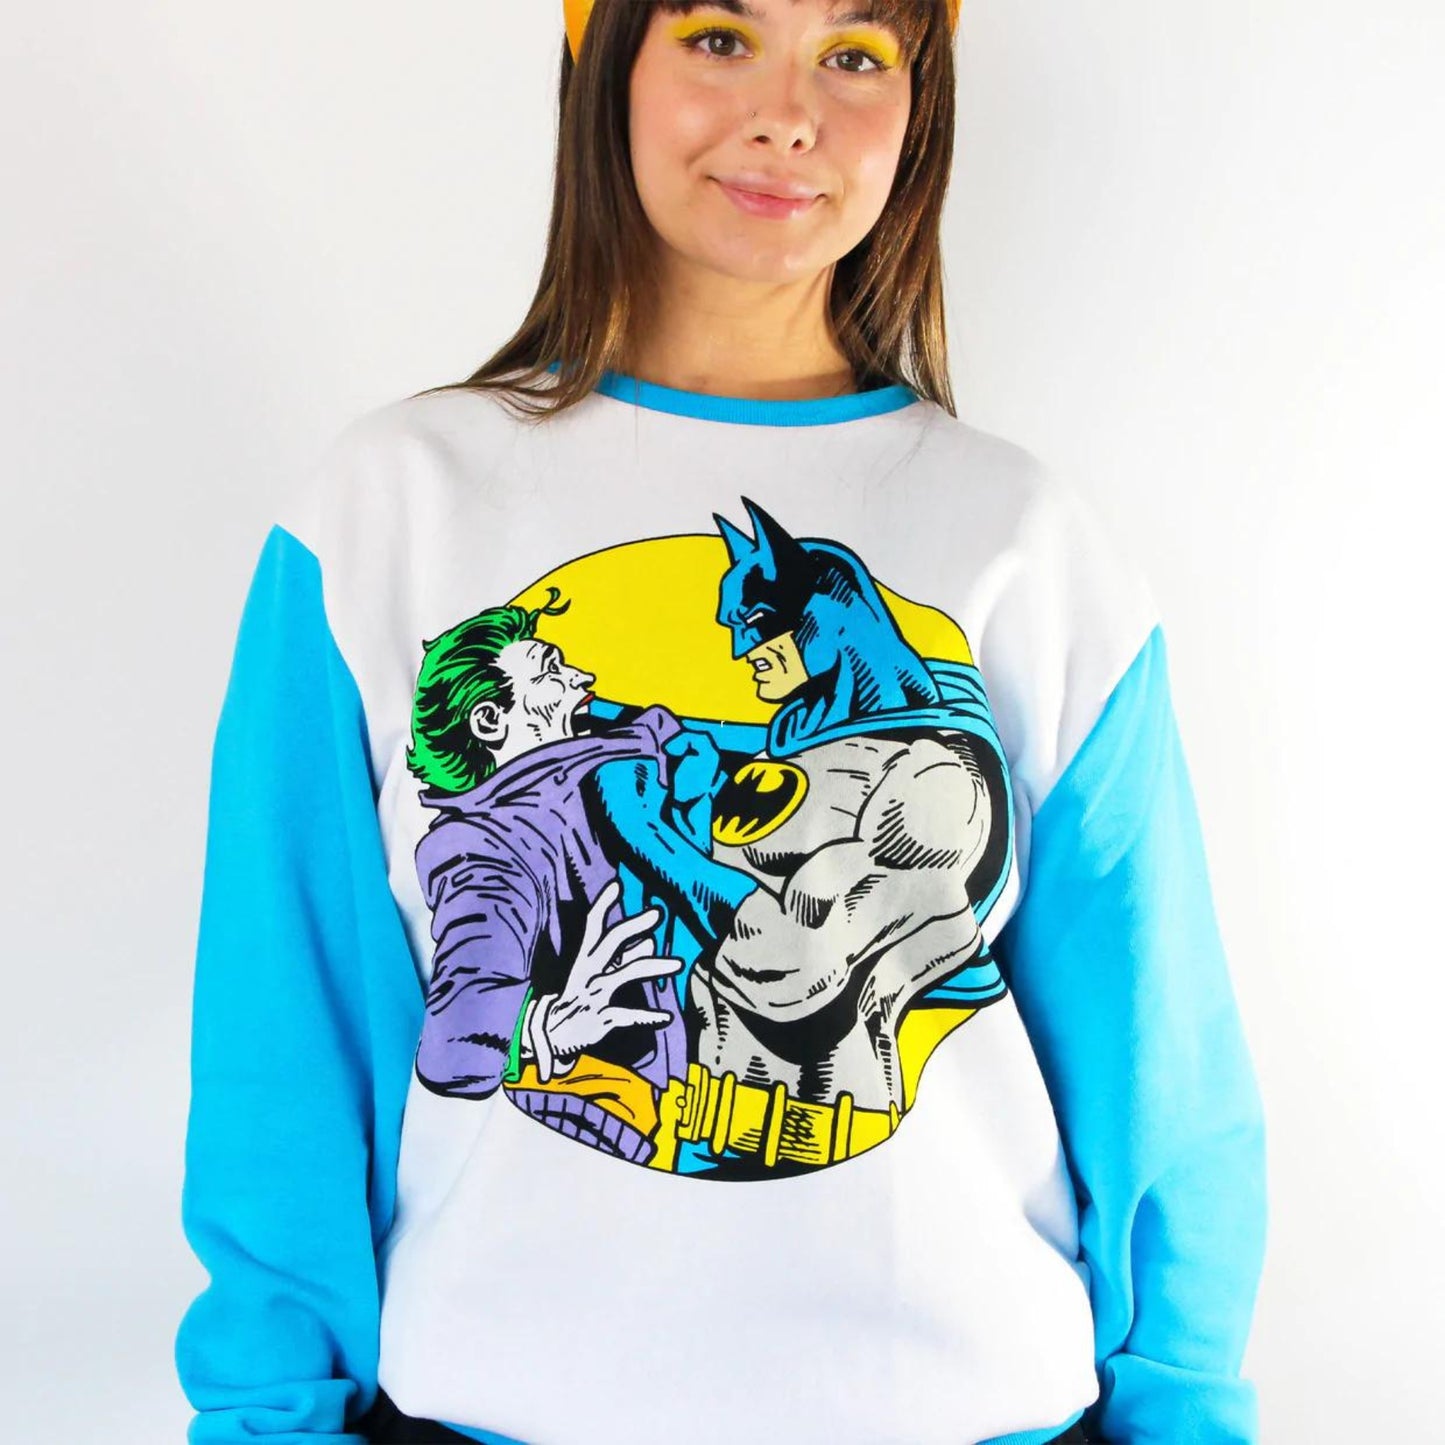 Batman & The Joker (DC Comics) Crew Neck Sweater by Cakeworthy